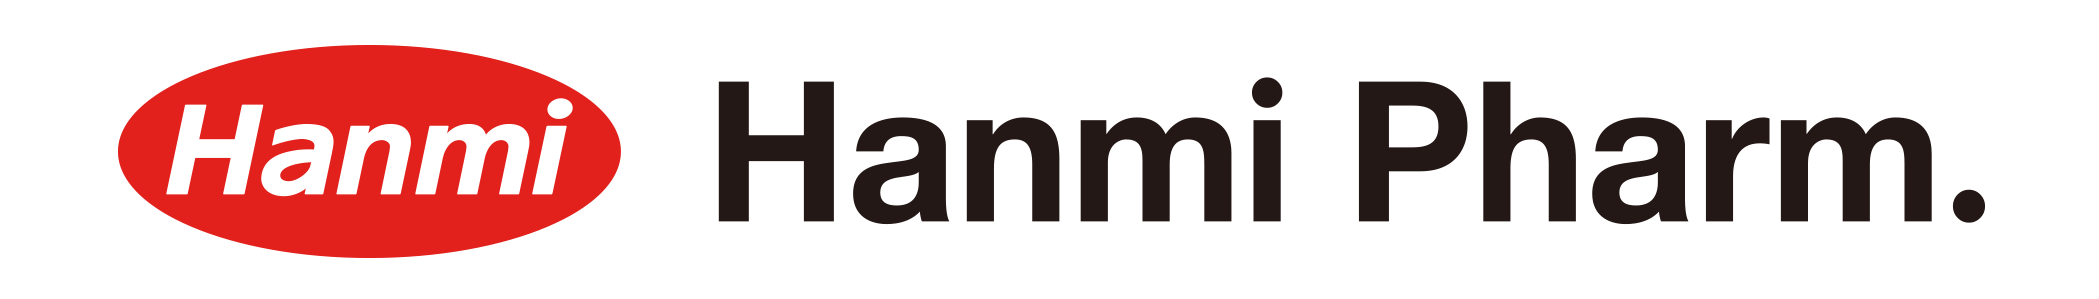 hanmipharm_logo